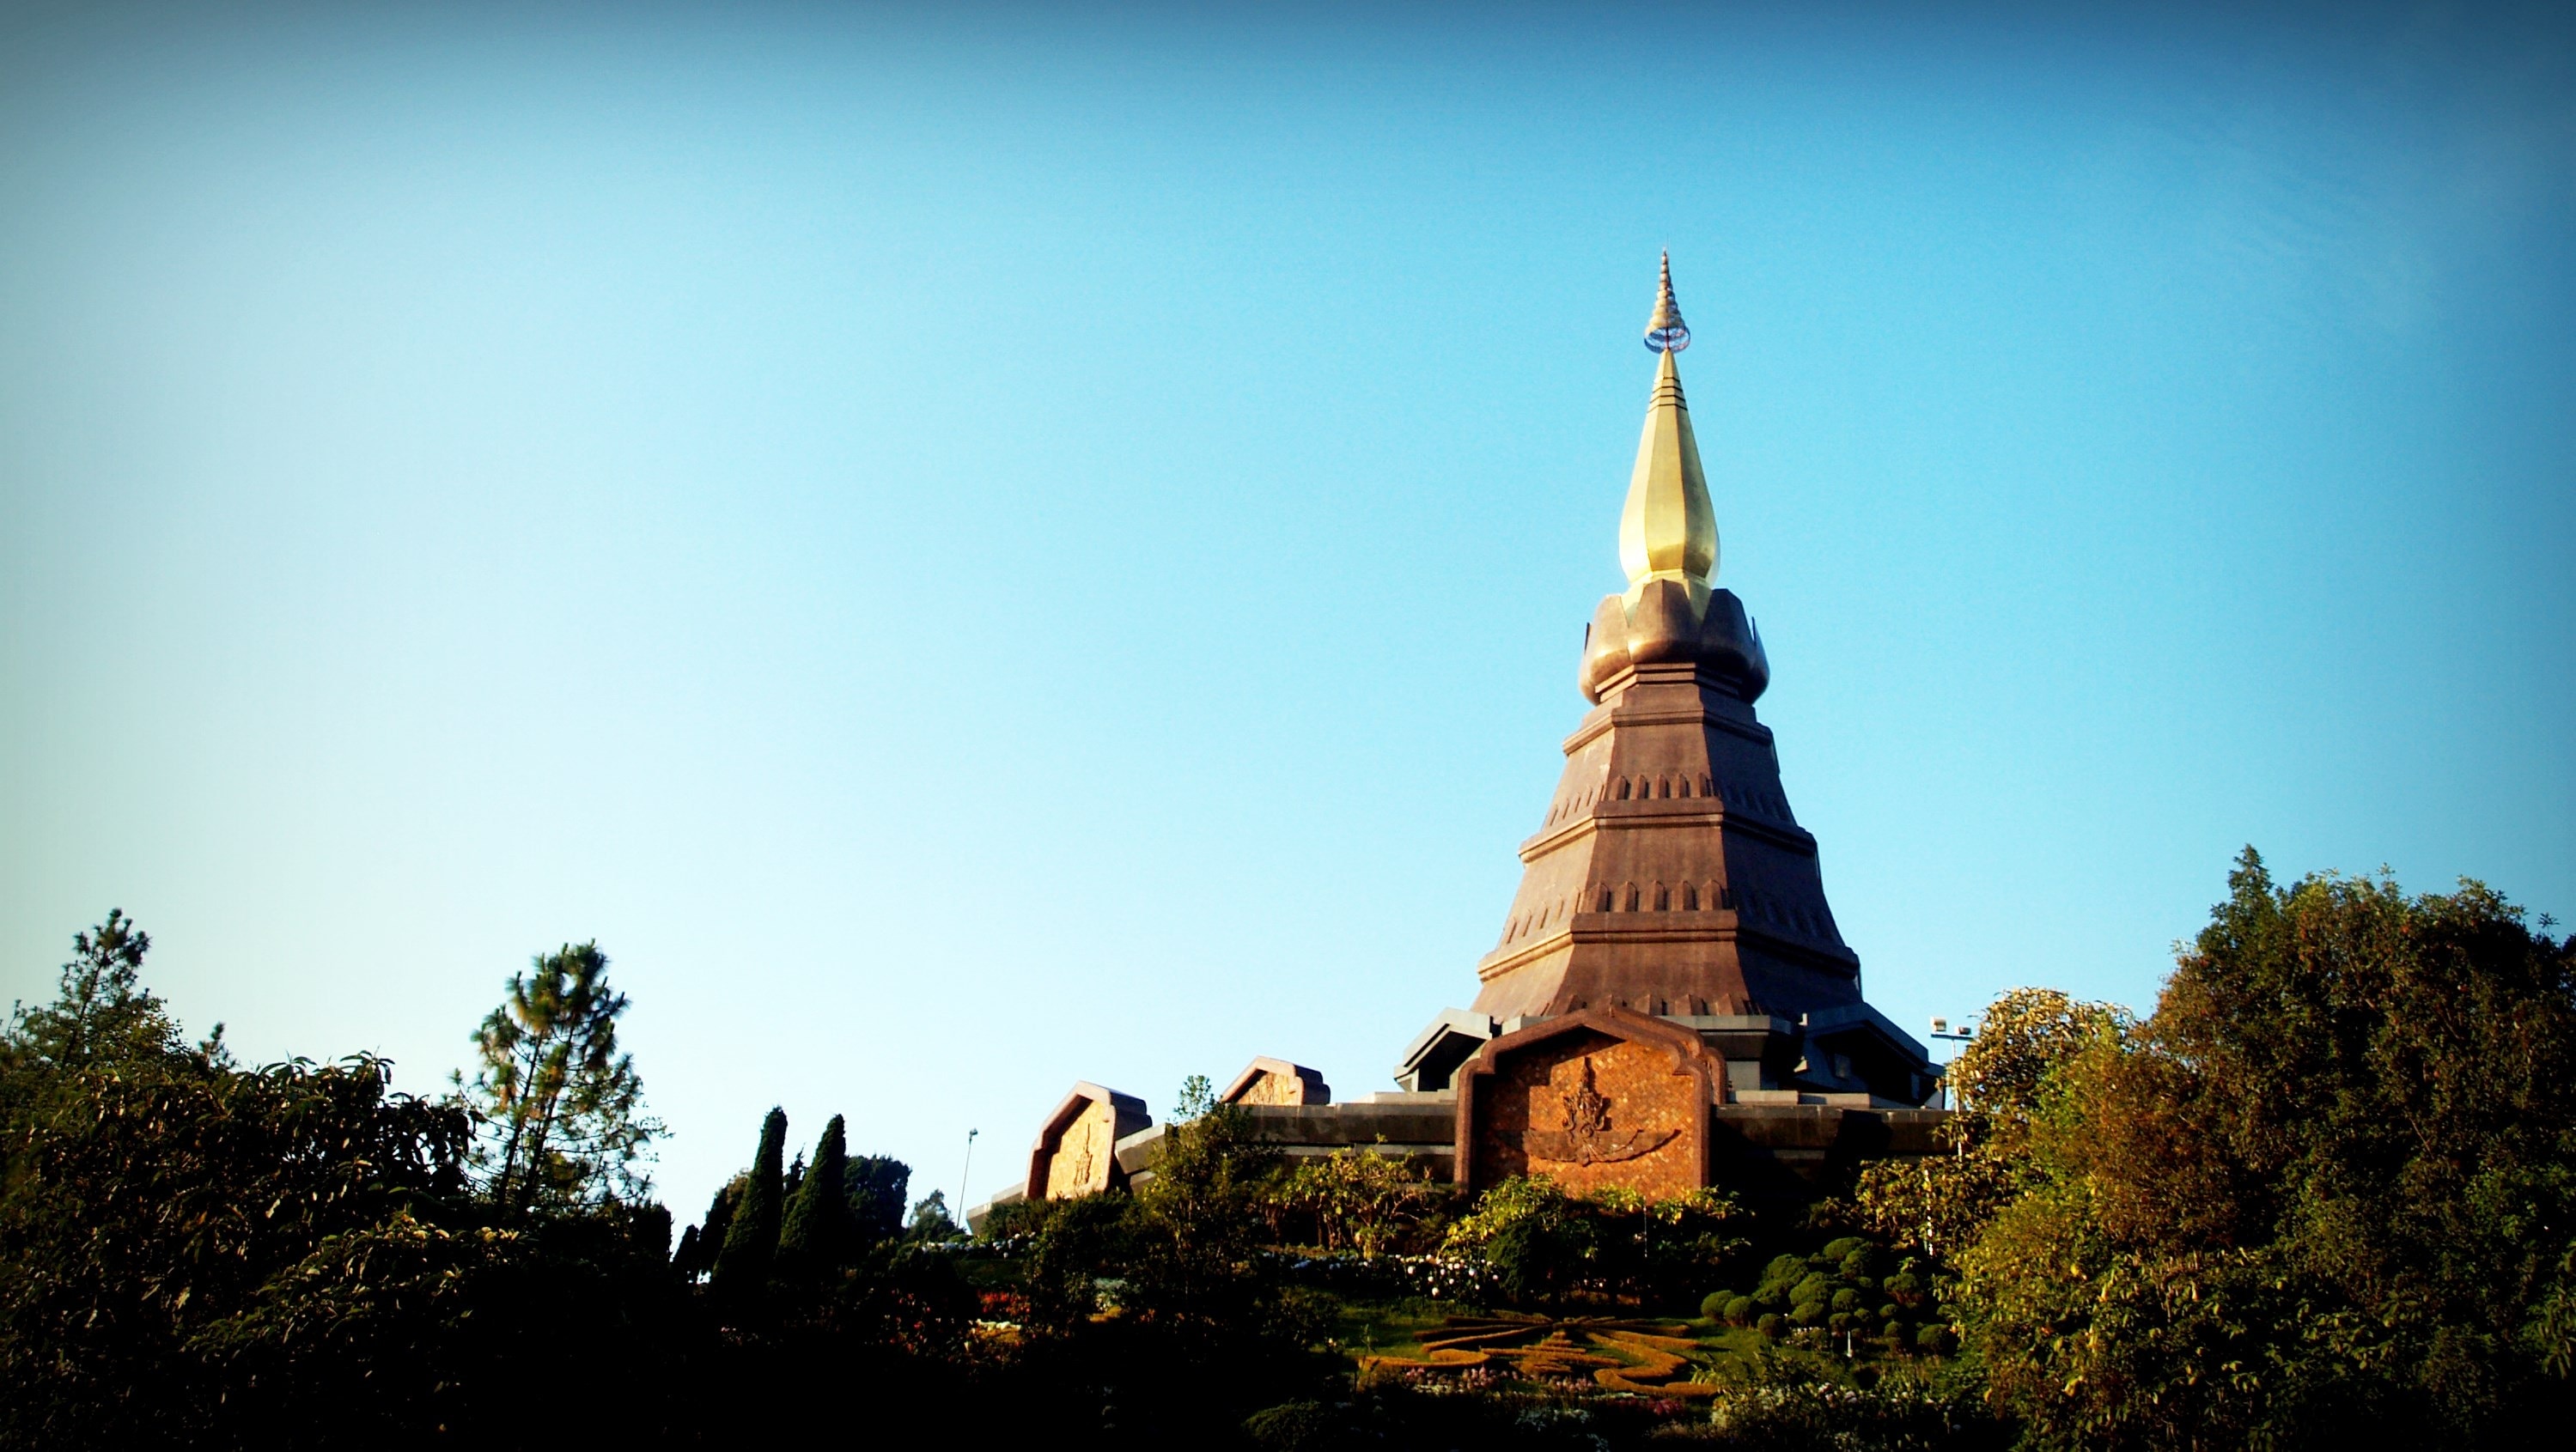 beige pagoda temple